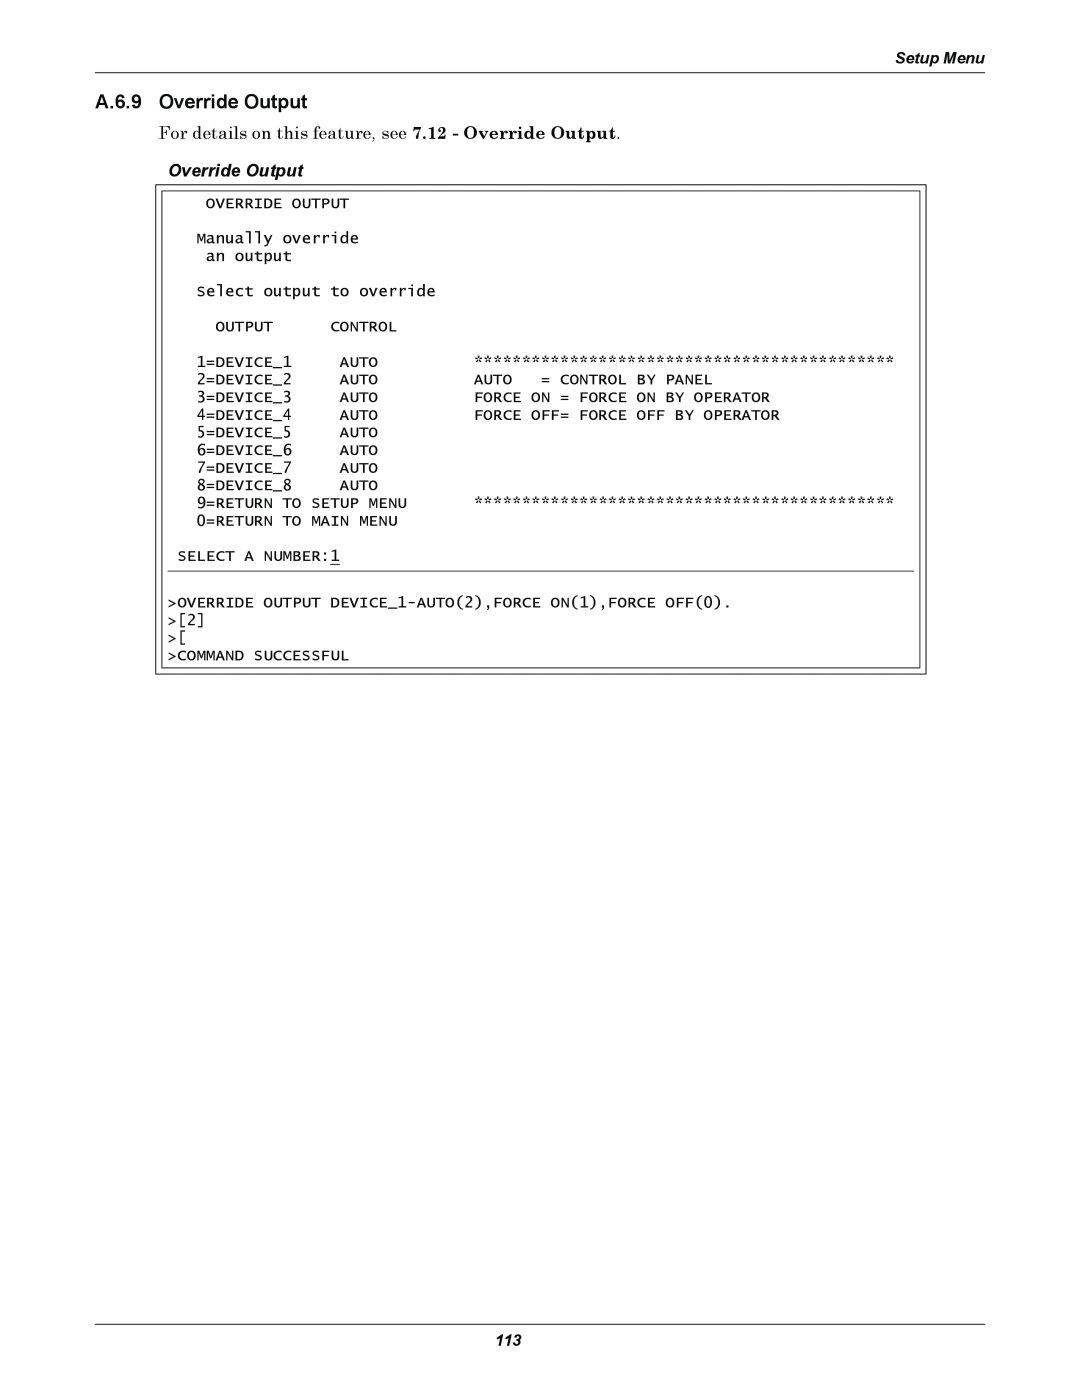 Emerson AC8 user manual A.6.9 Override Output, Setup Menu 